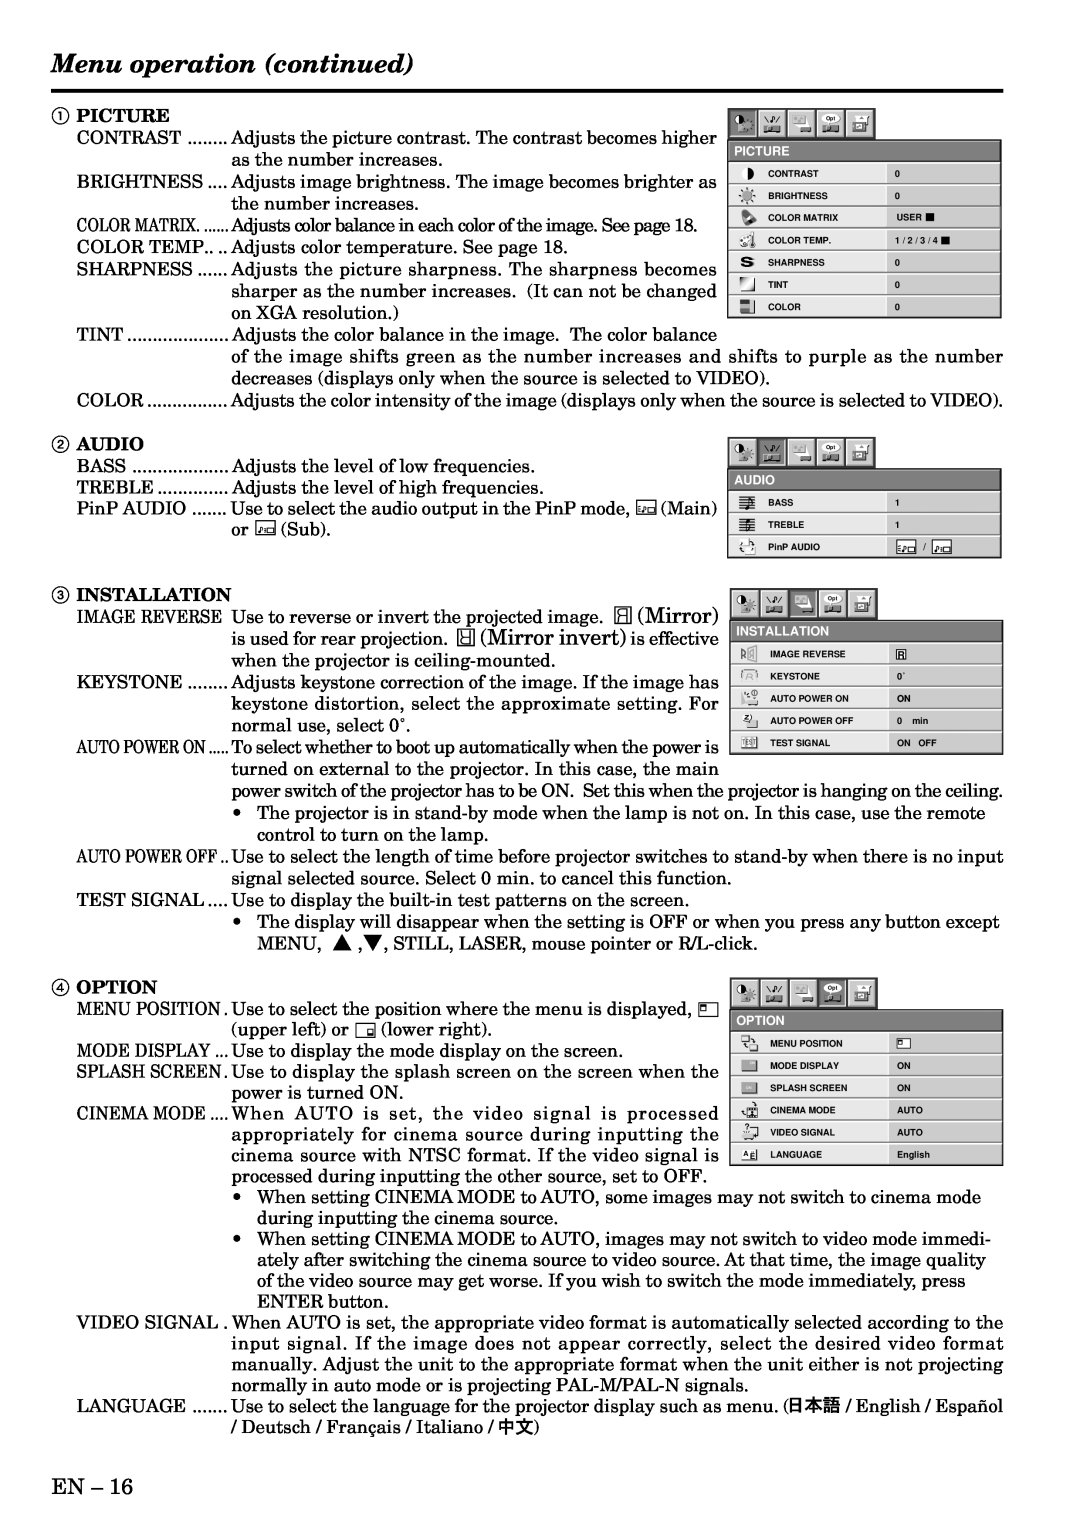 Mitsubishi Electronics S290U user manual Menu operation continued 